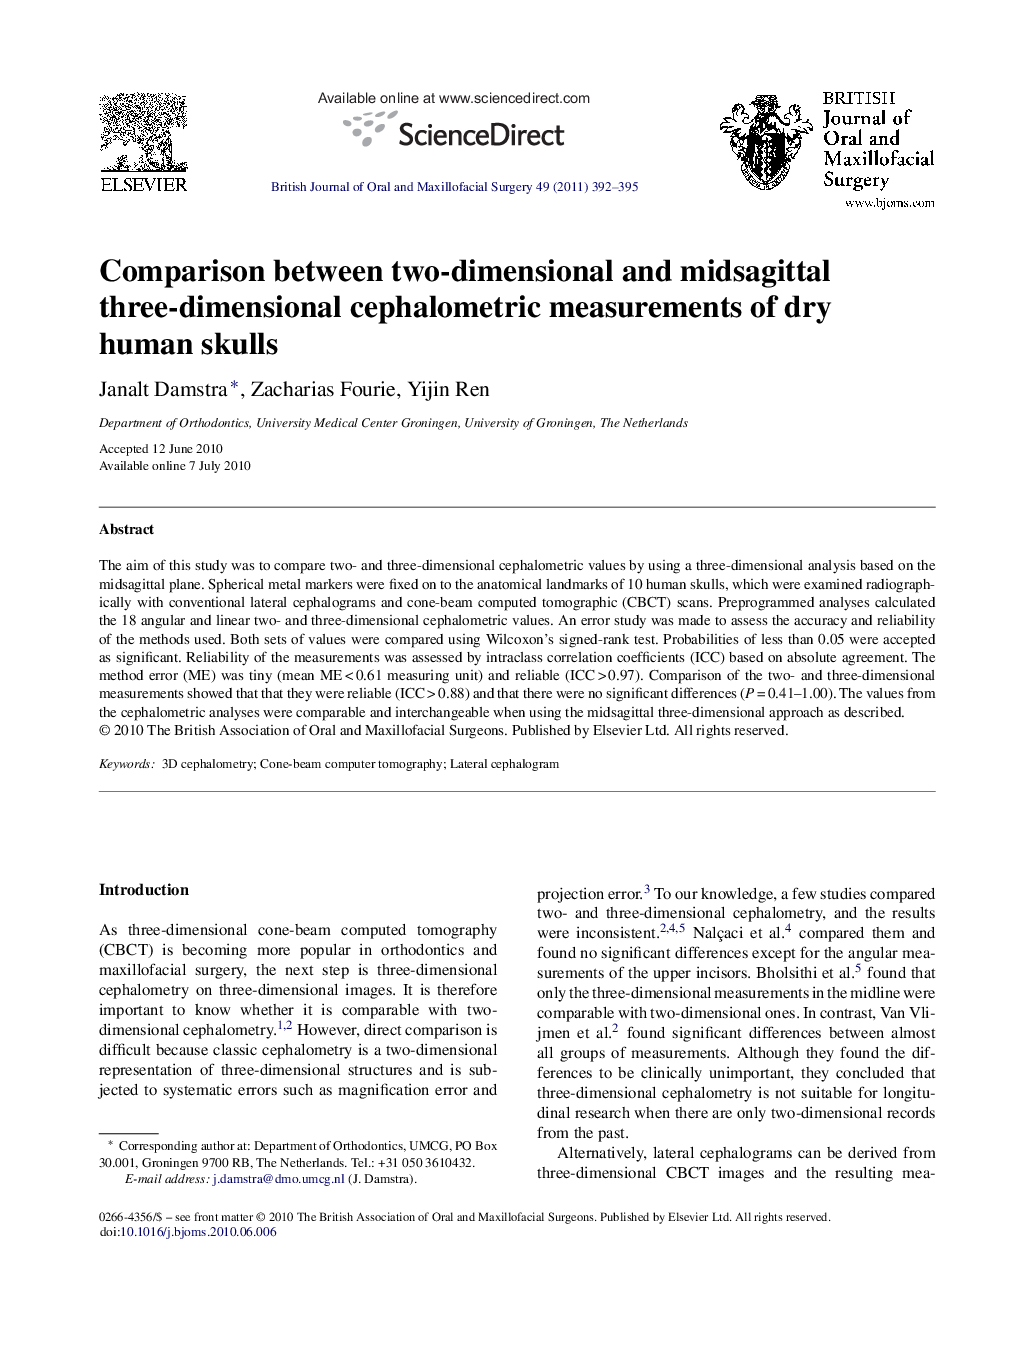 Comparison between two-dimensional and midsagittal three-dimensional cephalometric measurements of dry human skulls